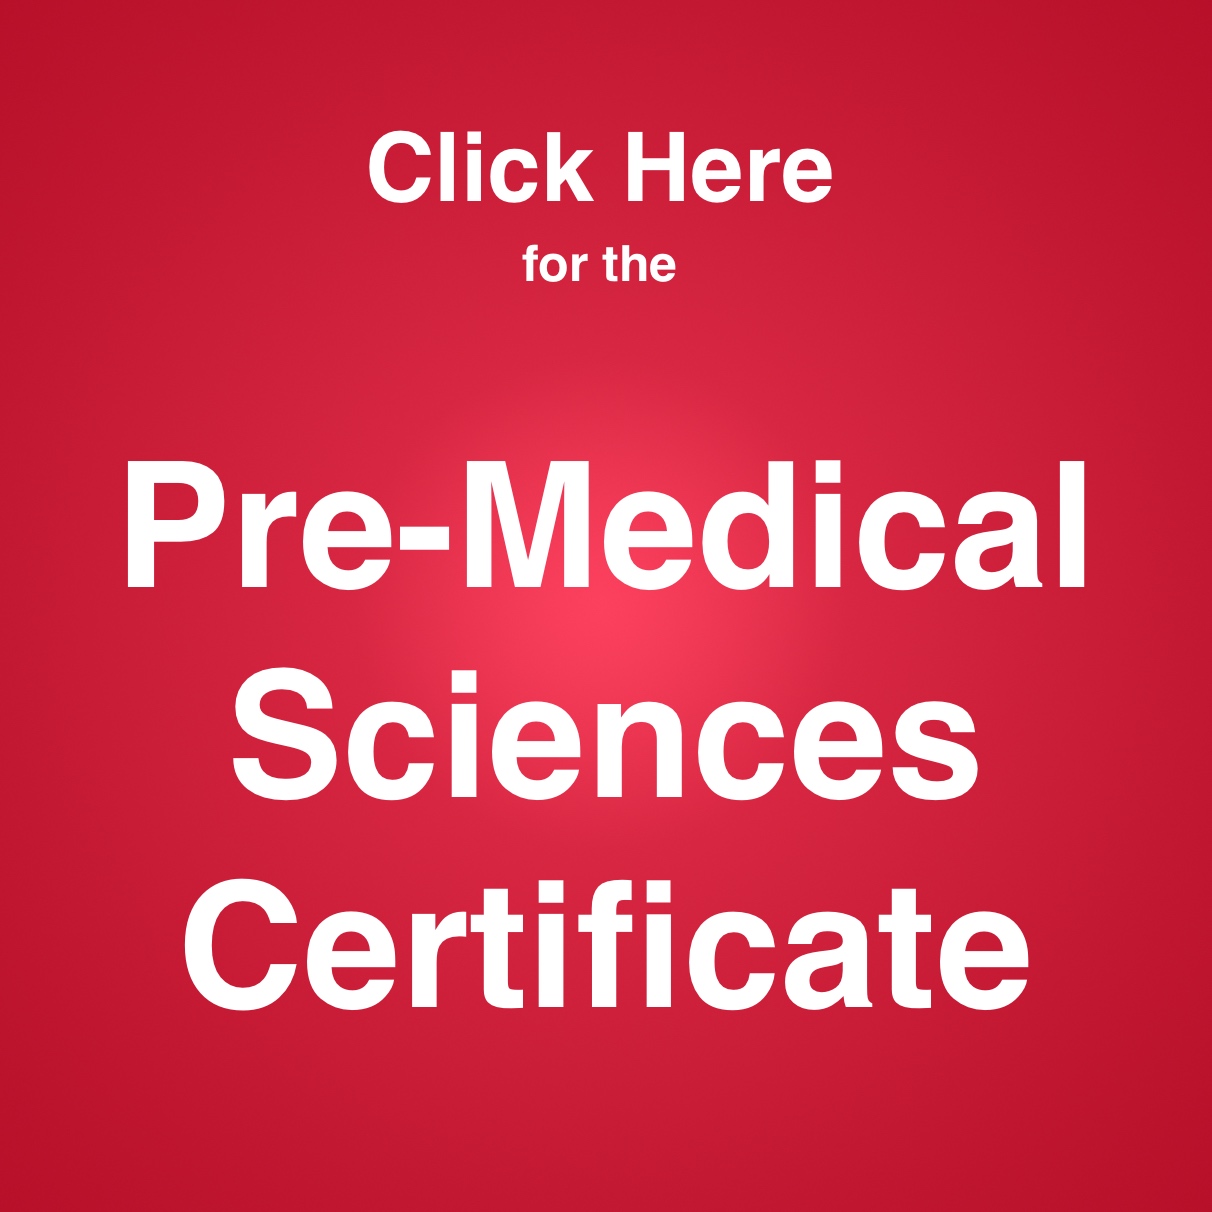 Pre-Medical Sciences Certificate